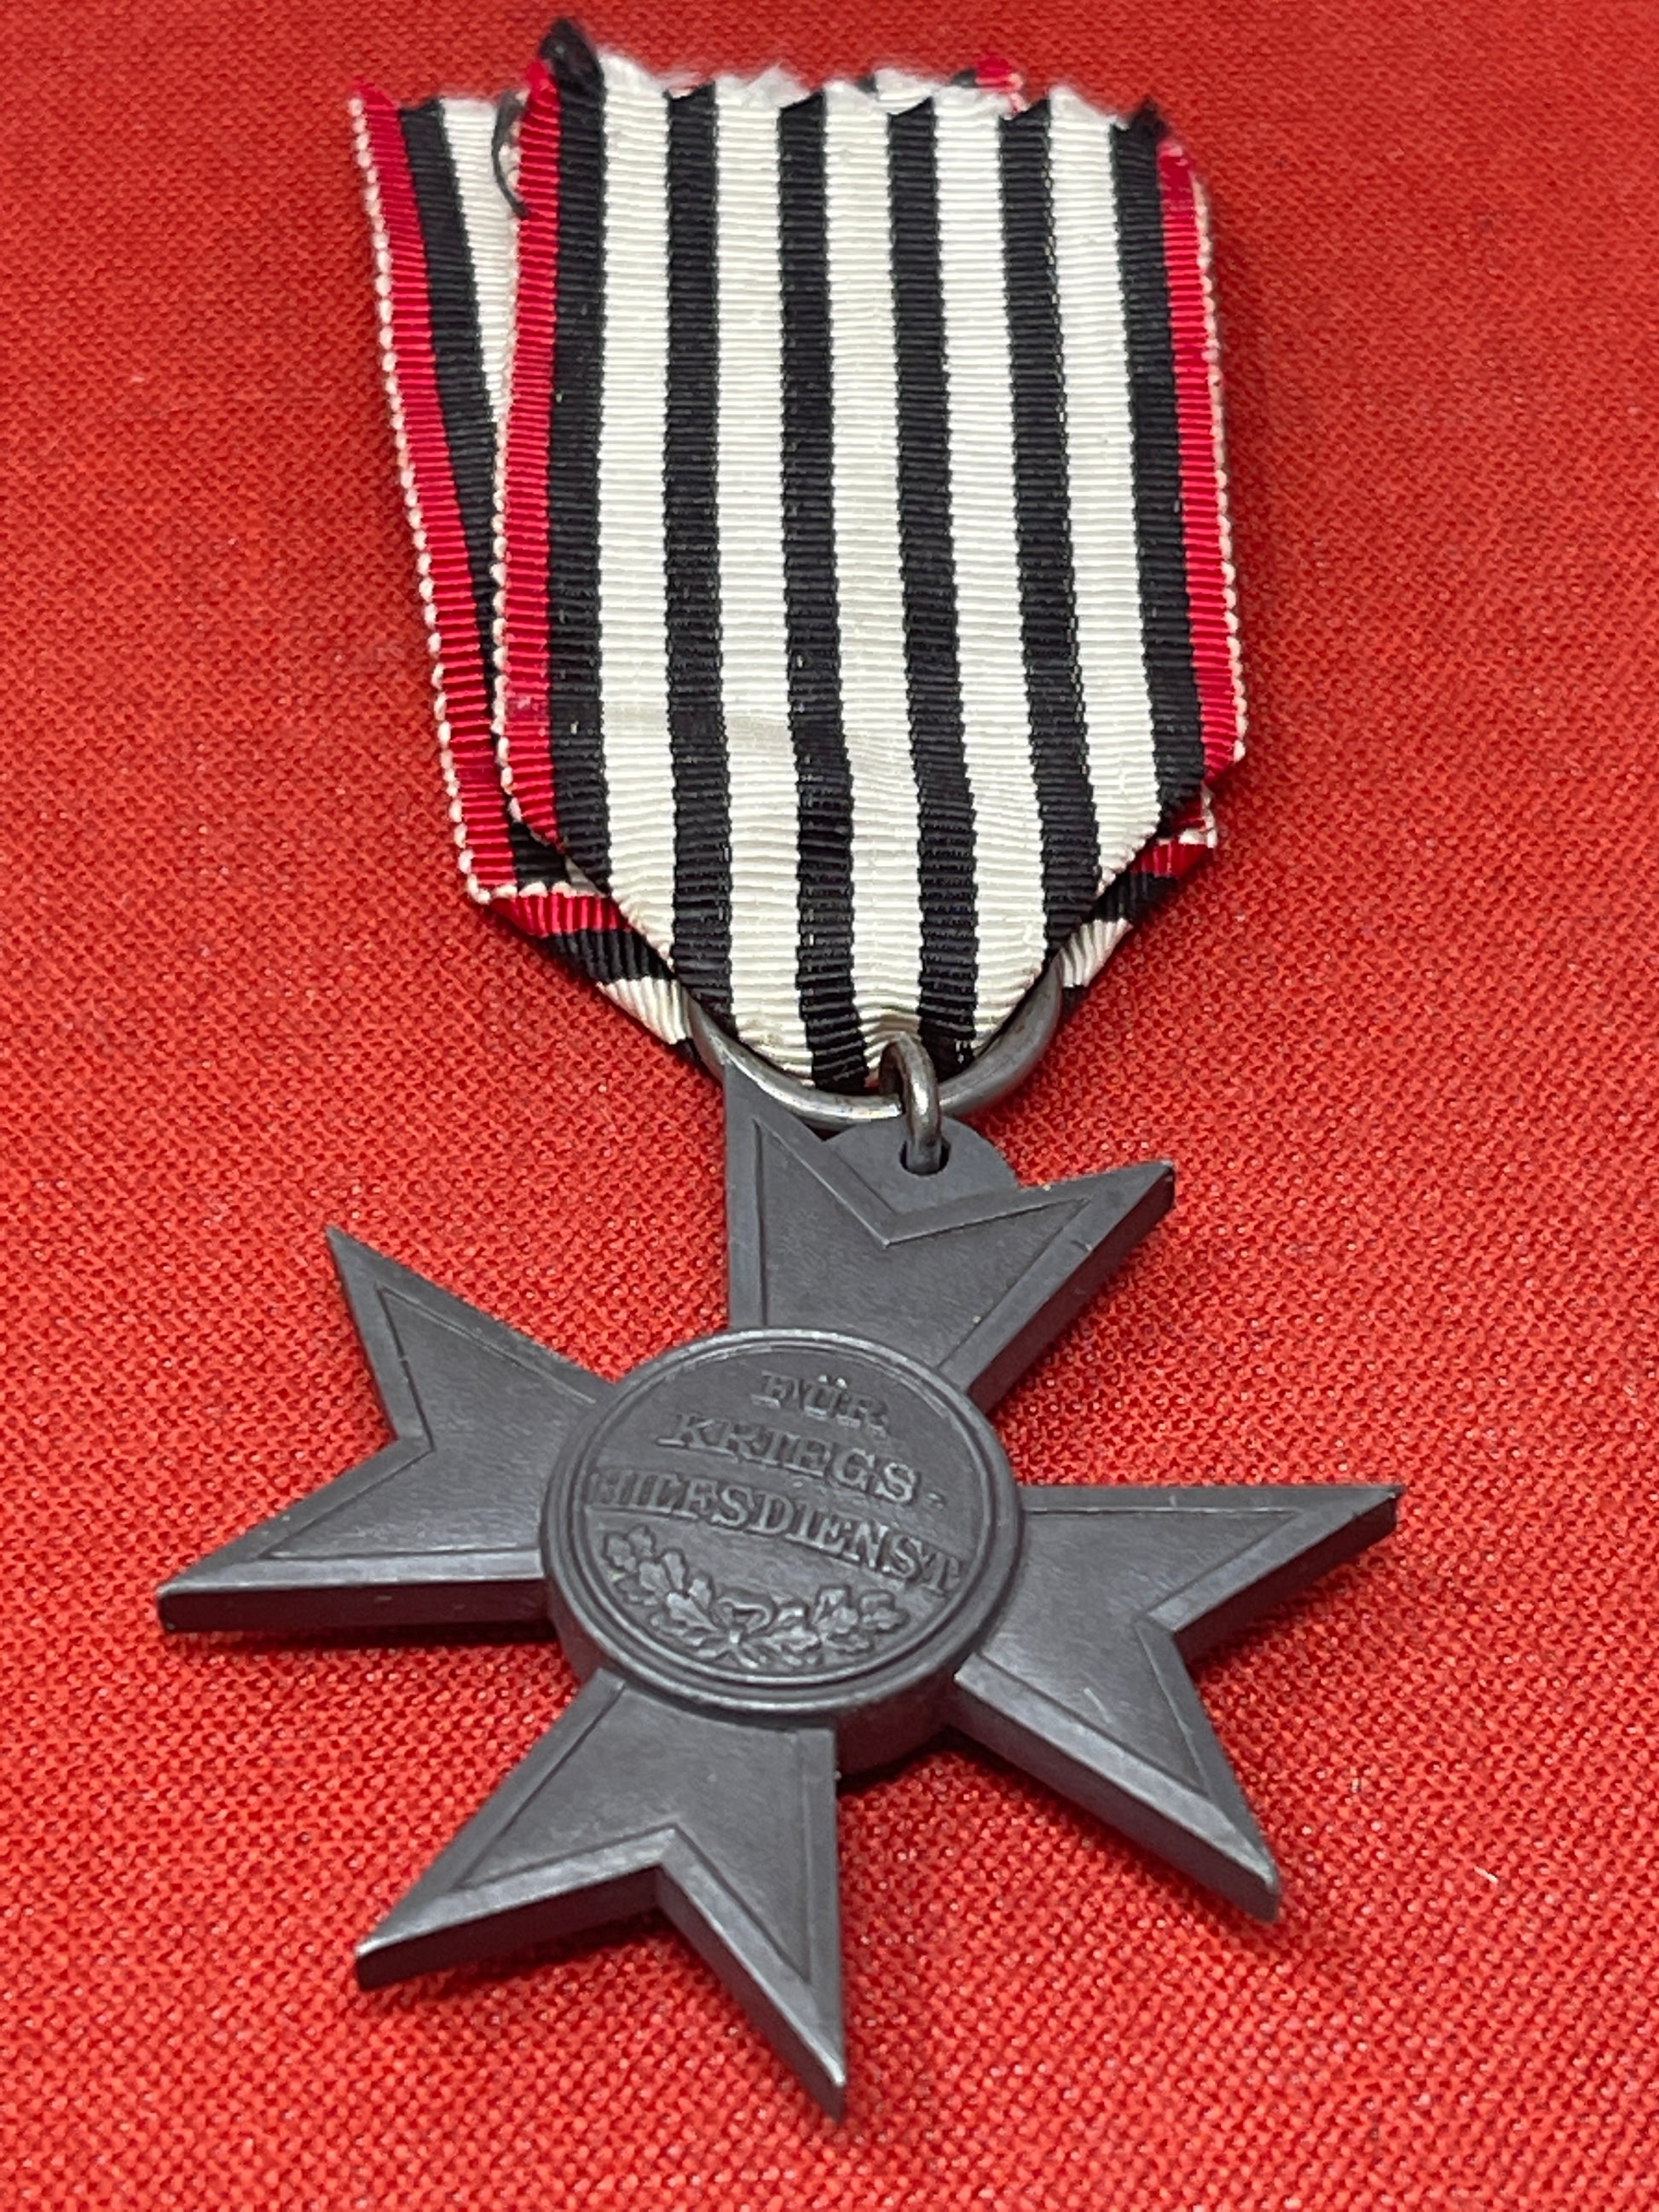 The  German Merit Cross for War Aid